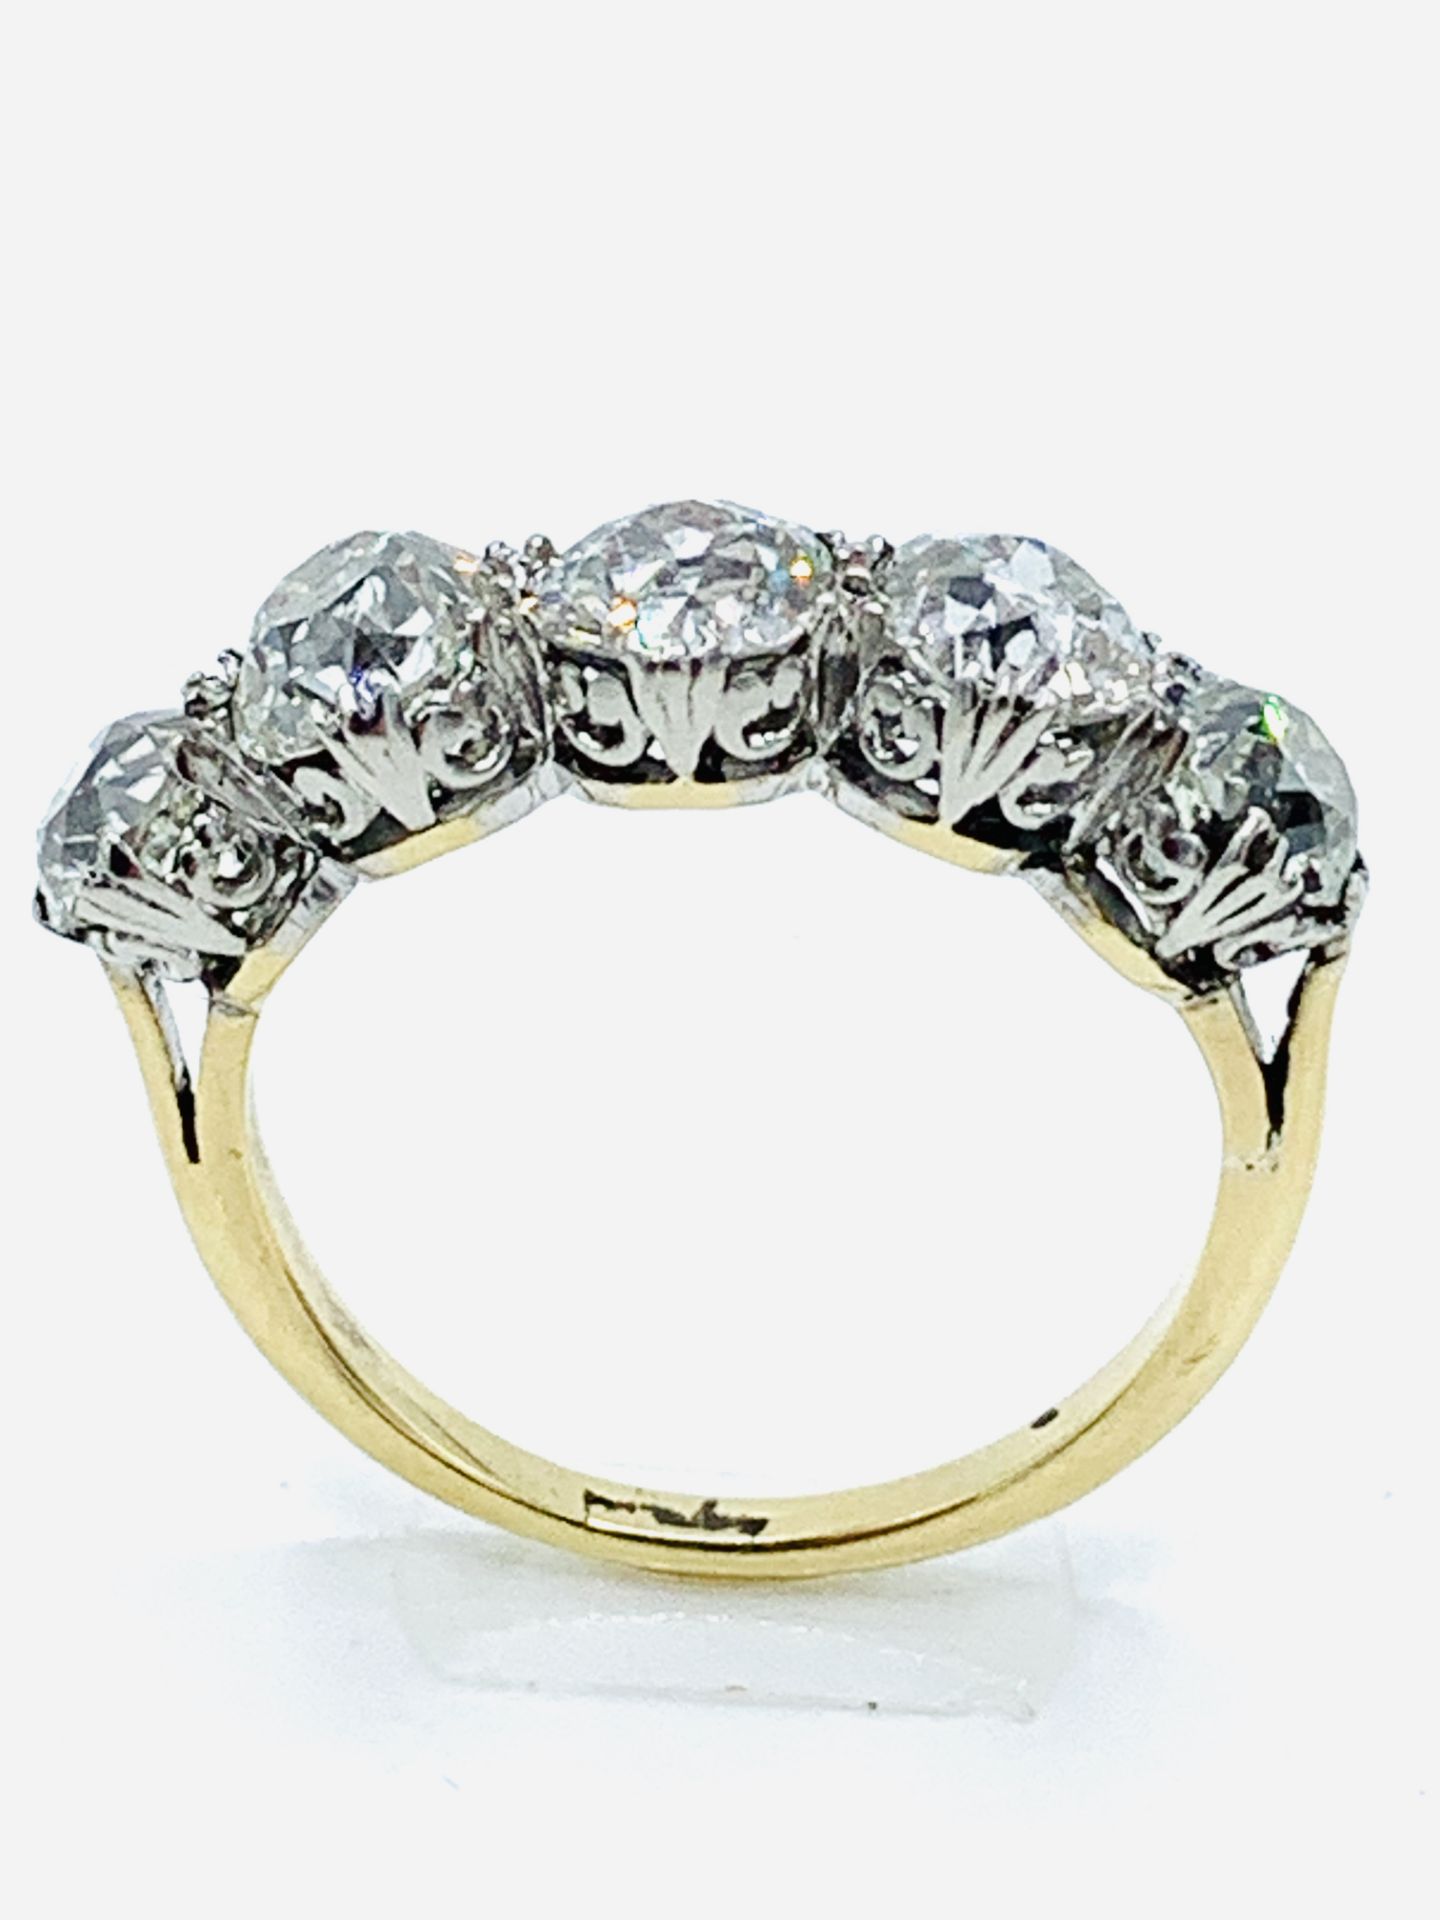 18ct gold and platinum 5 diamond half eternity ring. - Image 2 of 4